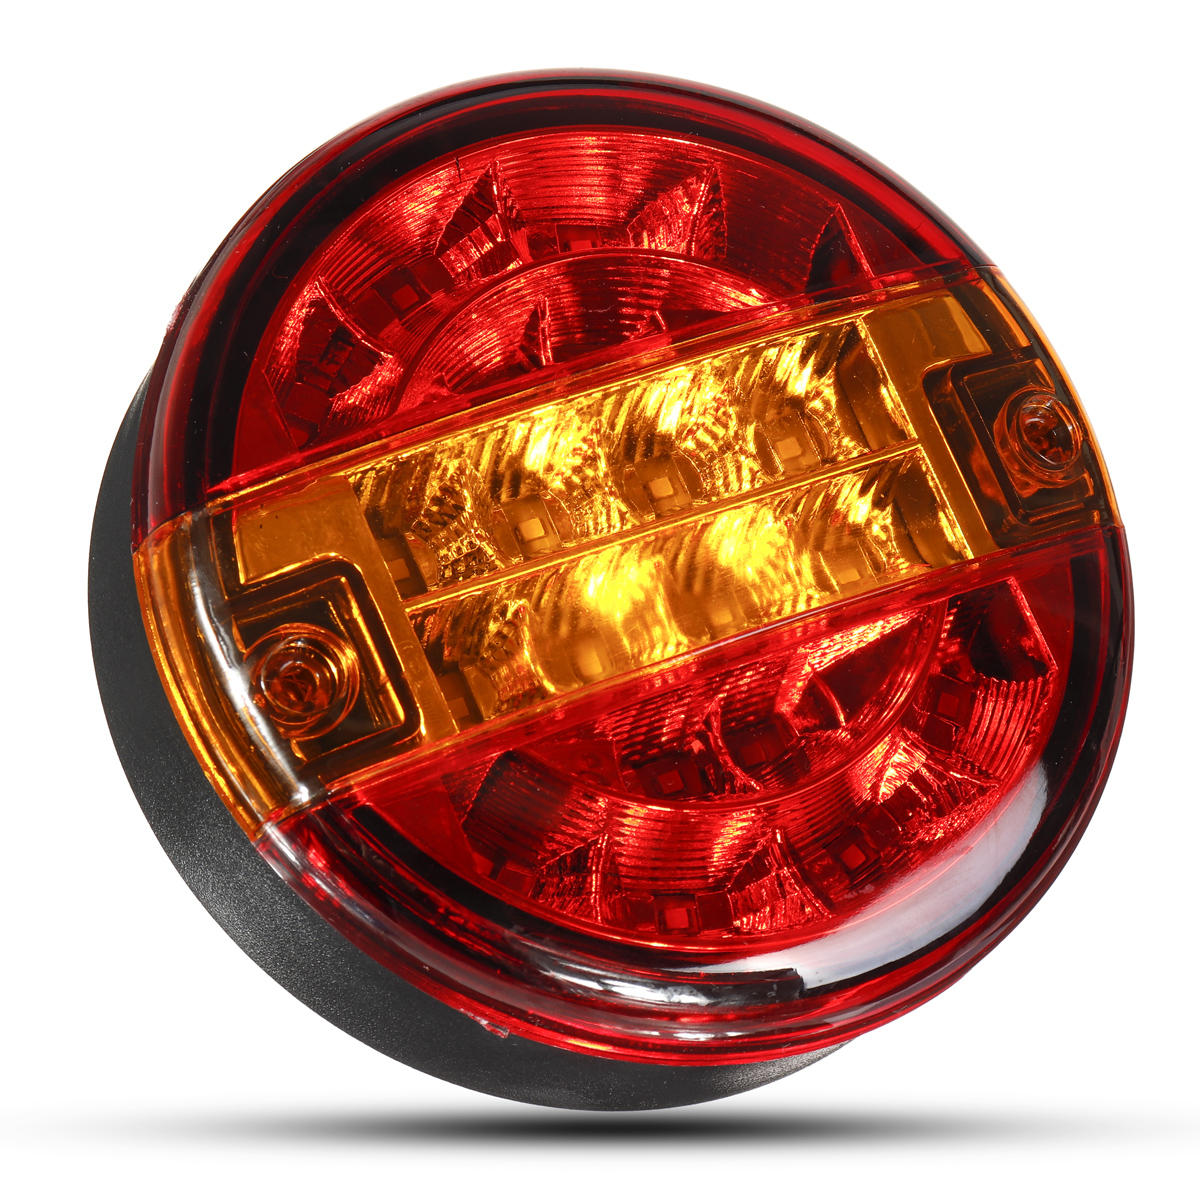 12 V 24 V Auto Achter LED Achterlicht Rem Stop Richtingaanwijzer Lamp Ronde Hamburger Voor Vrachtwag